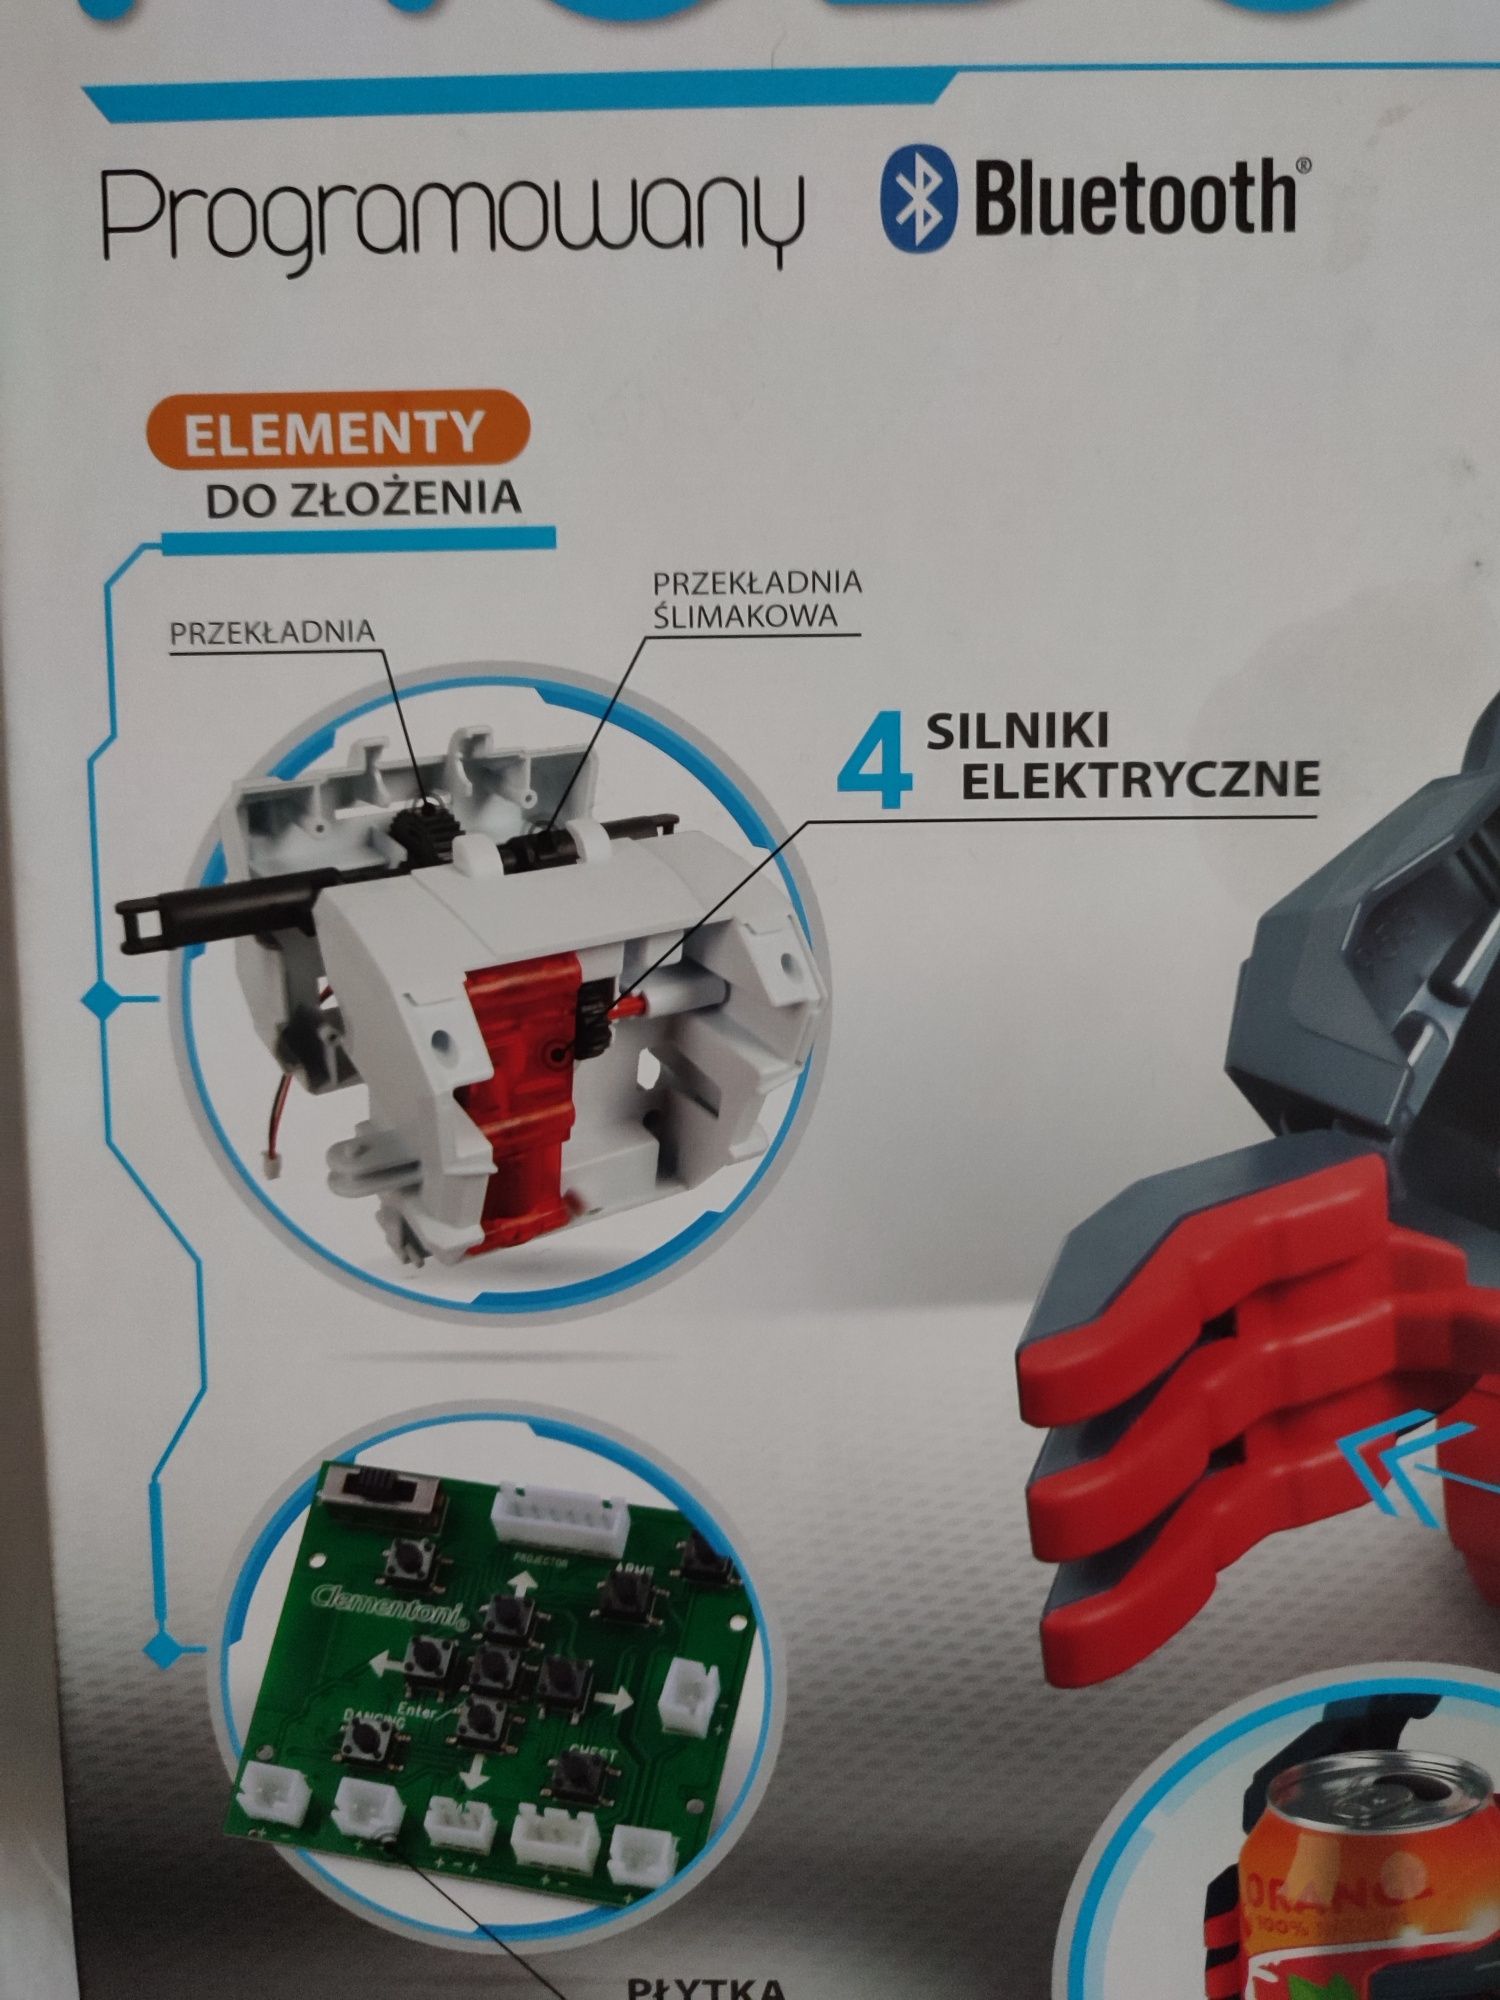 Clementoni robot evolution